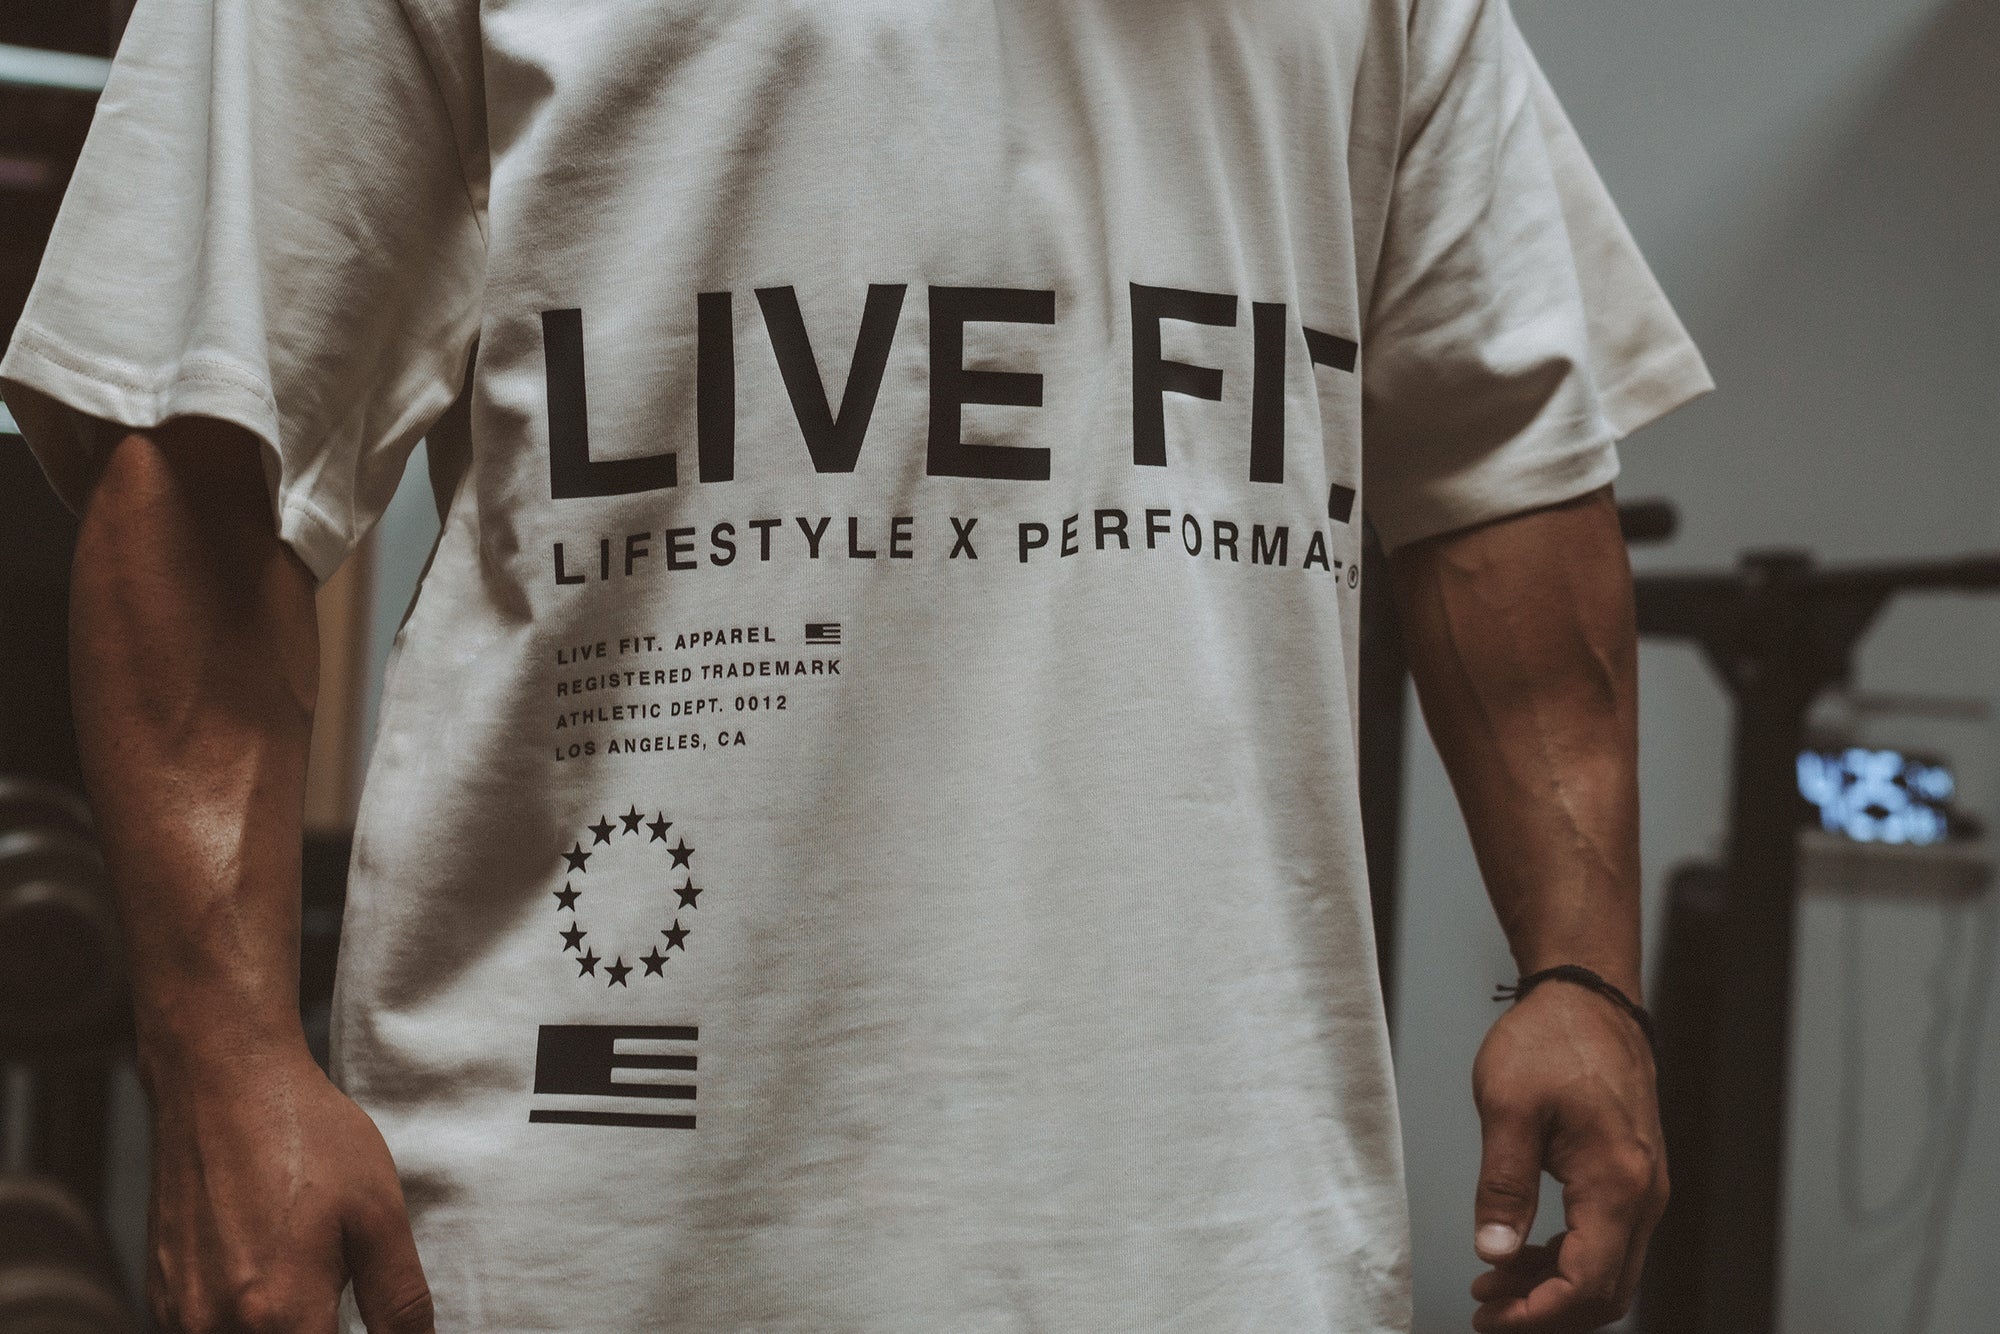 Lifestyle - Live Fit. Apparel